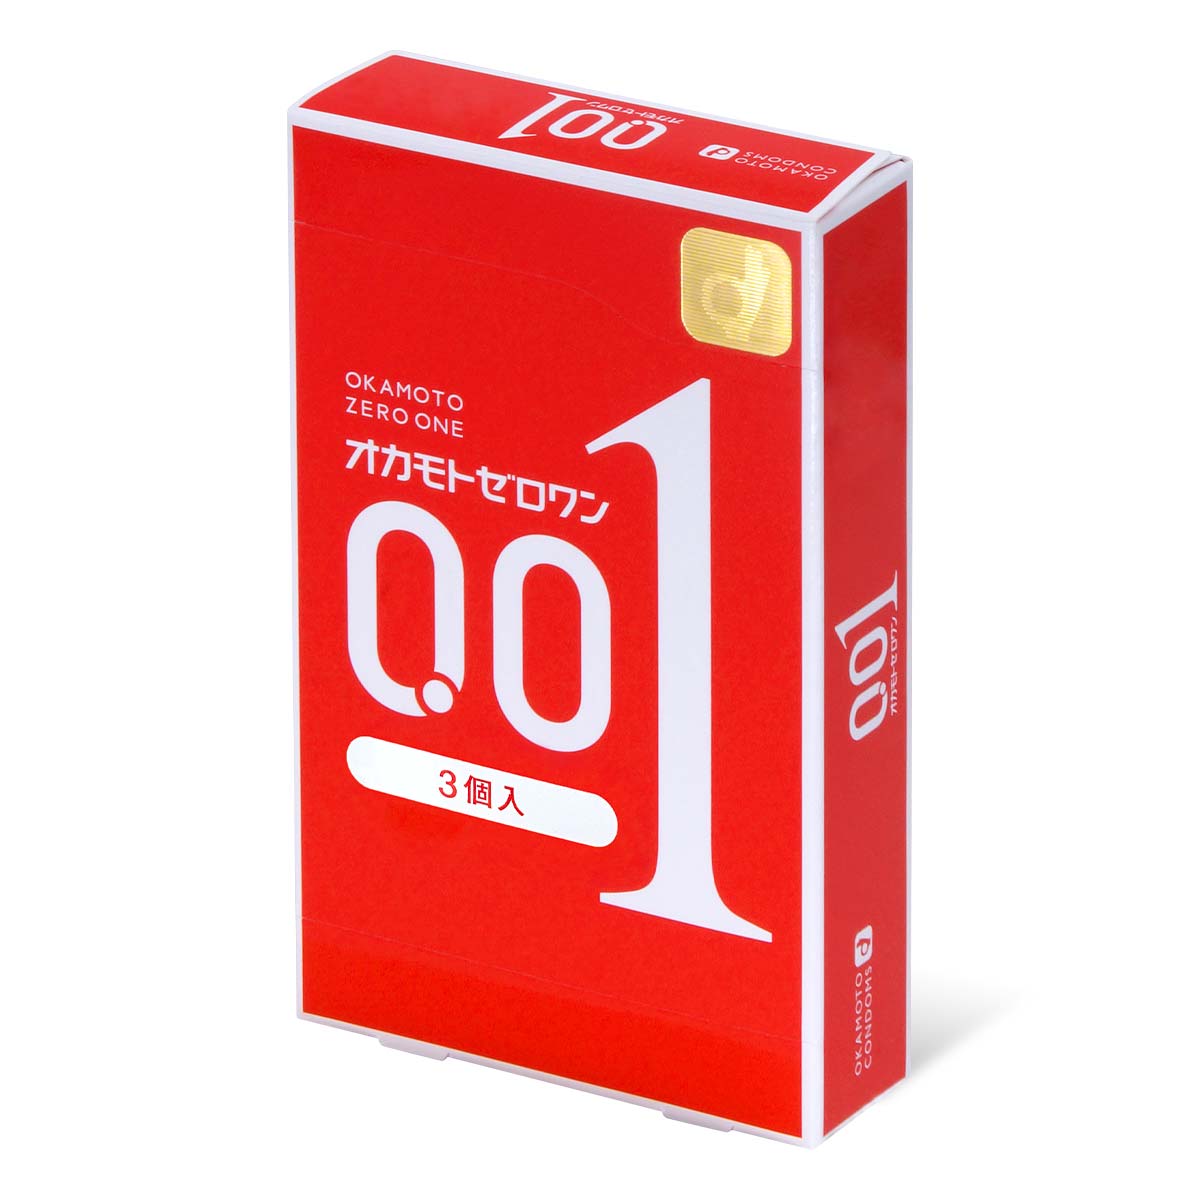 Okamoto 0.01 3's Pack PU Condom-p_1